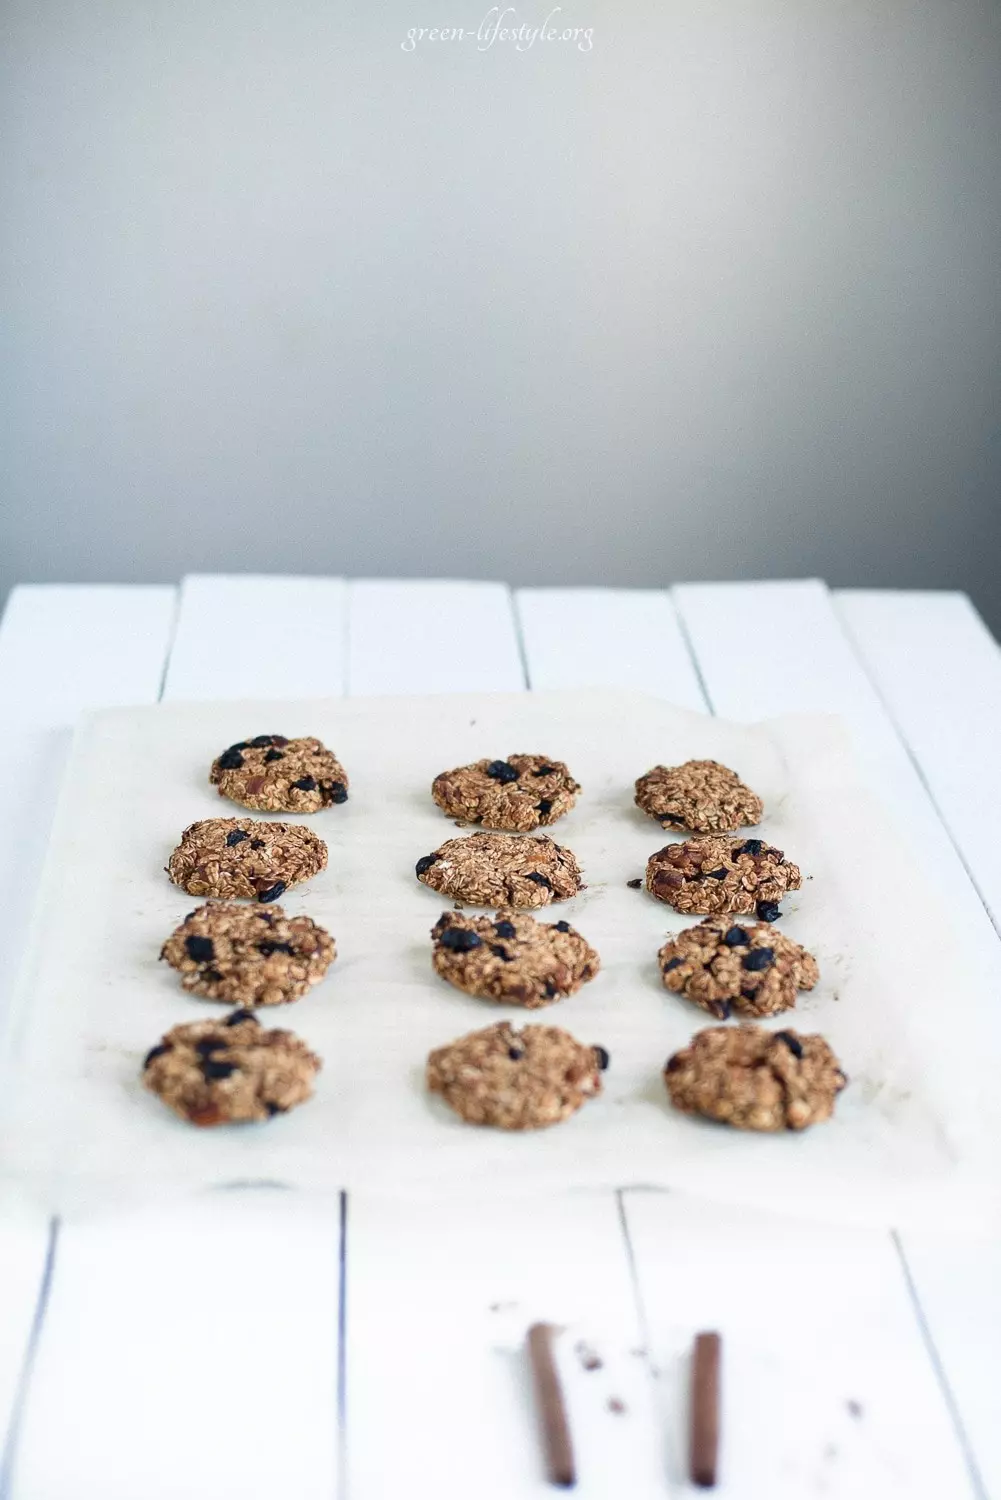 Печенье овсяное (Oatmeal Cookies)